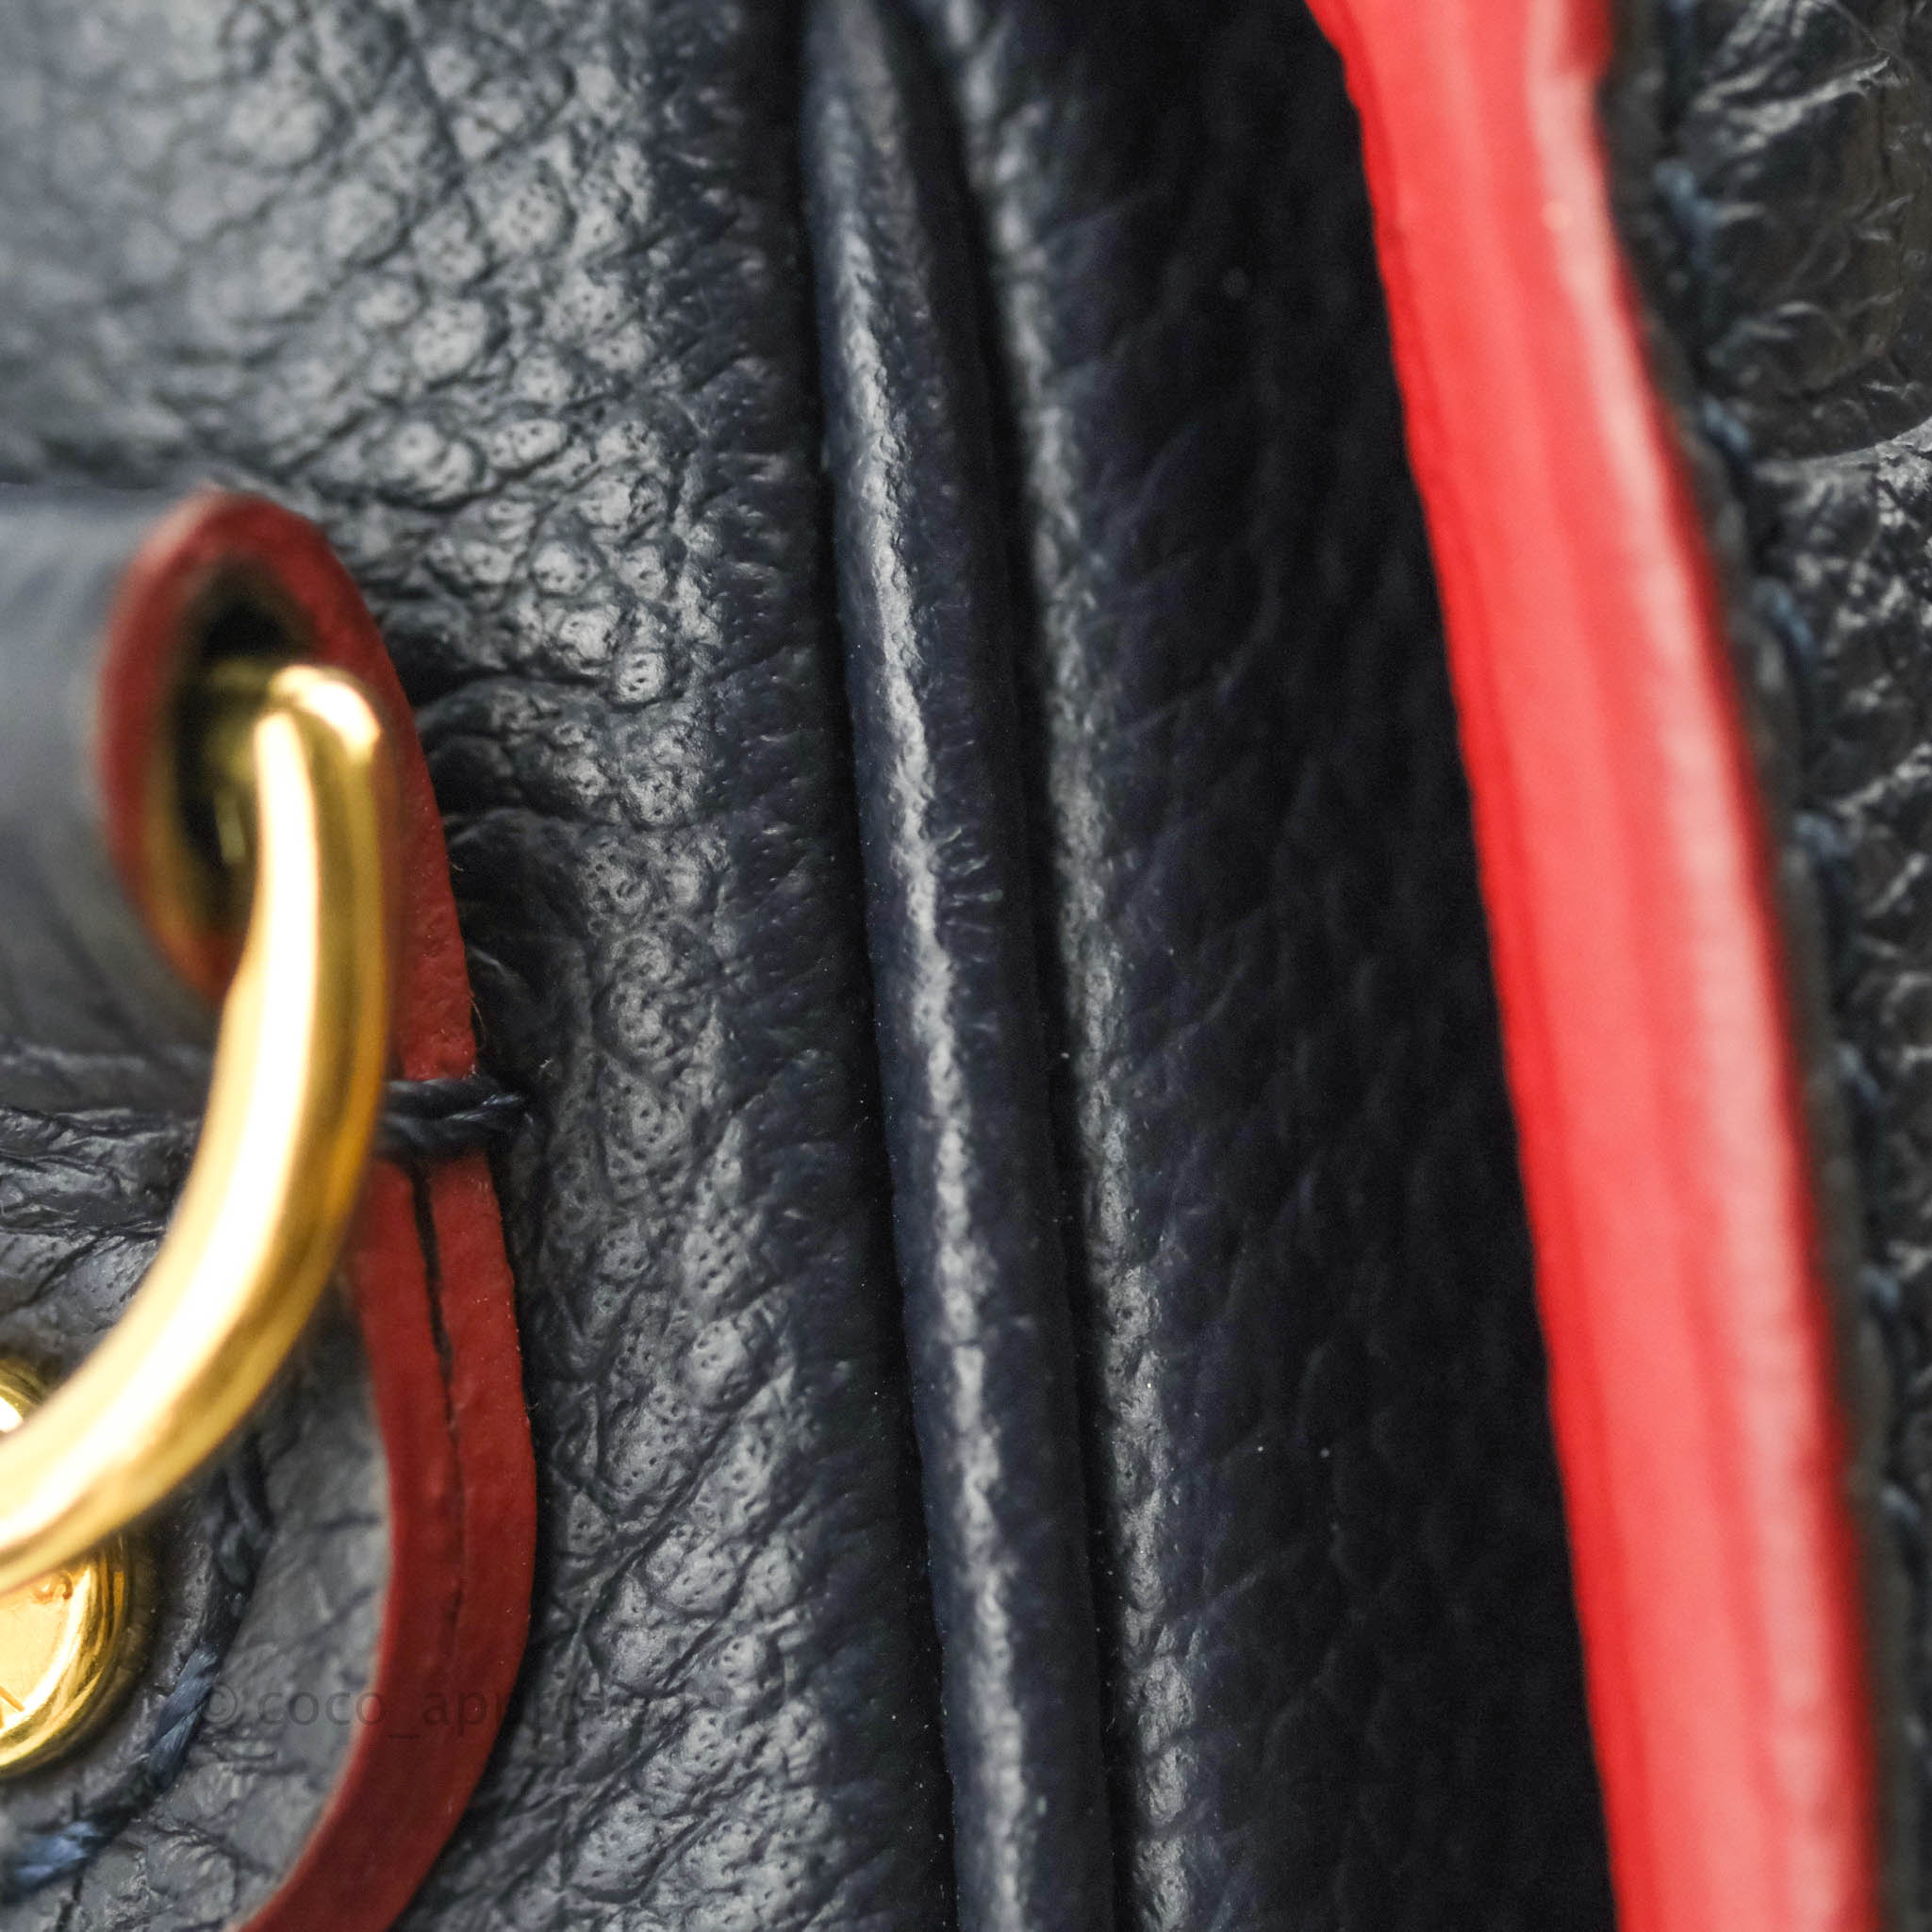 Louis Vuitton Empreinte Pochette Metis Marine Rouge – Coco Approved Studio